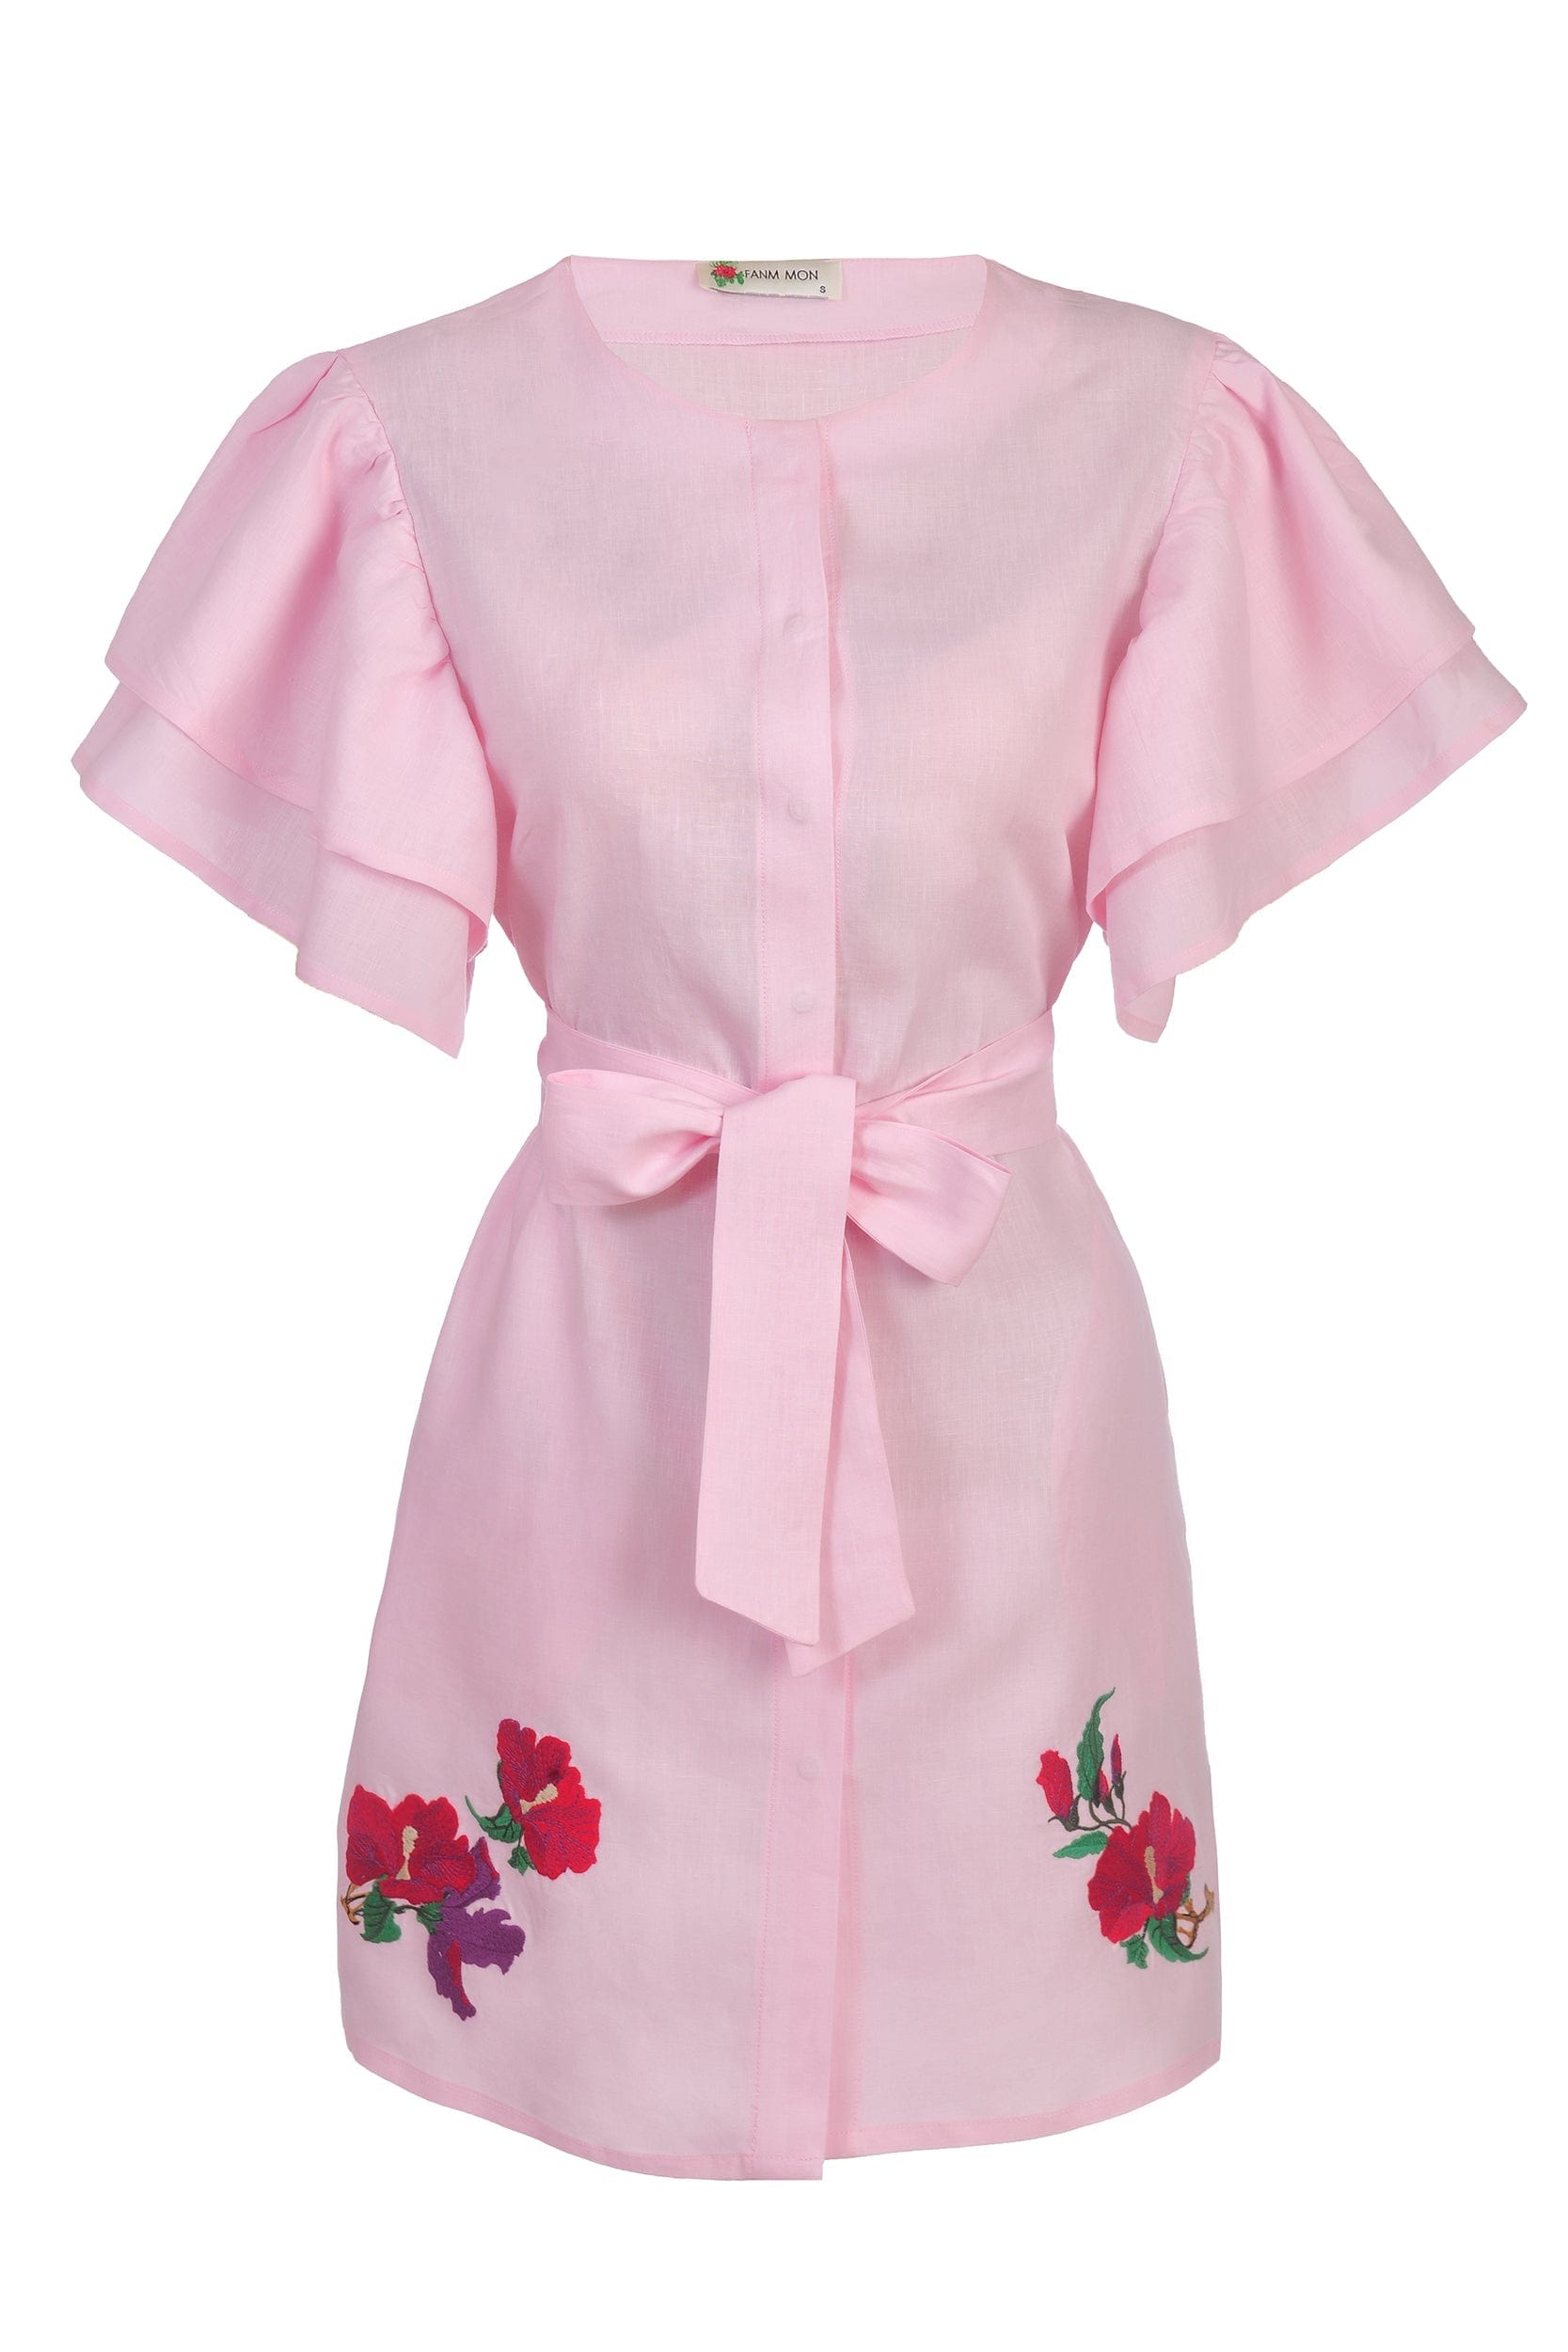 Fanm Mon Dresses L / Light Pink Kelly